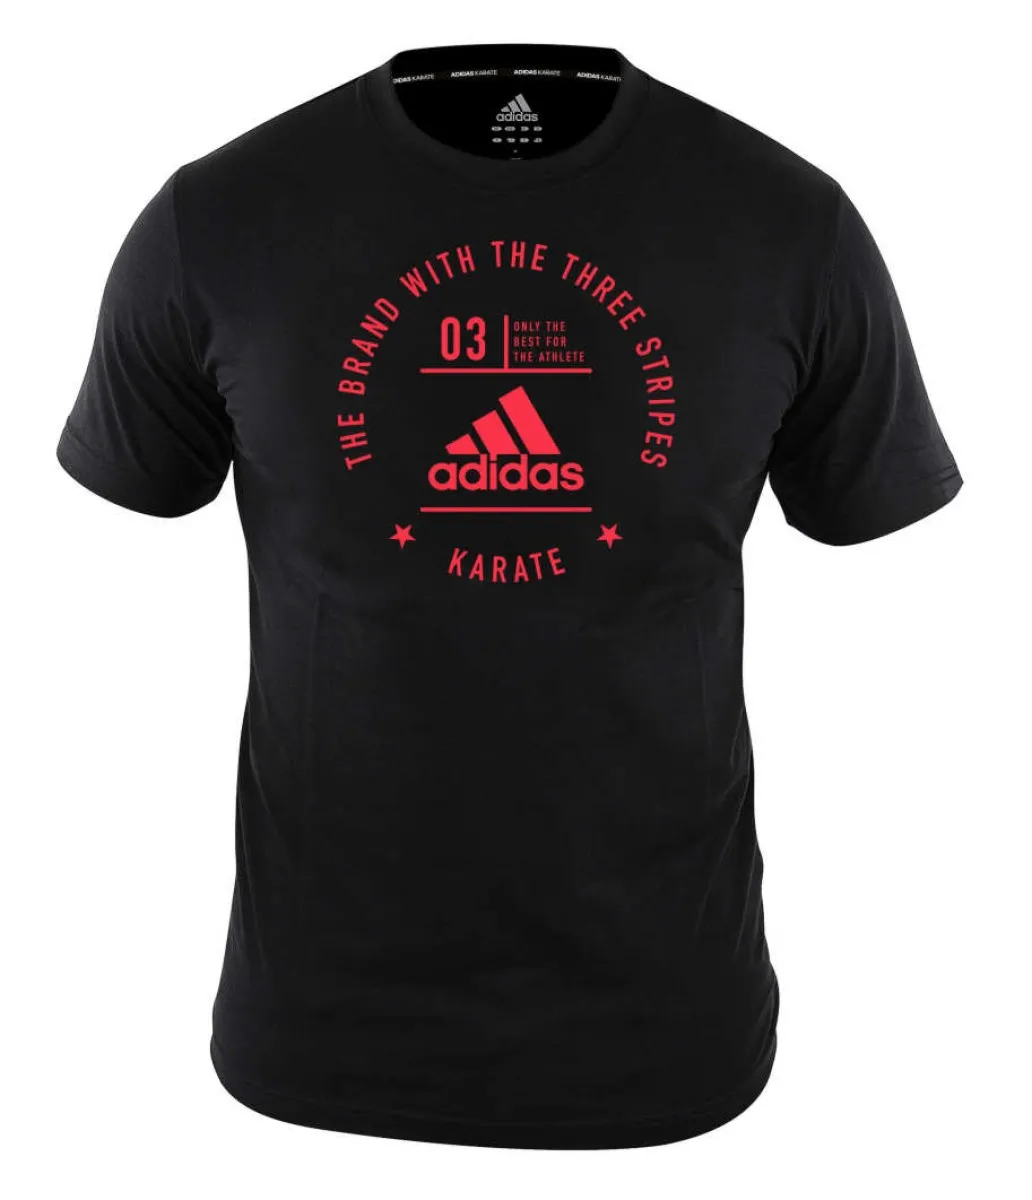 Camiseta adidas Community Karate negro/rojo